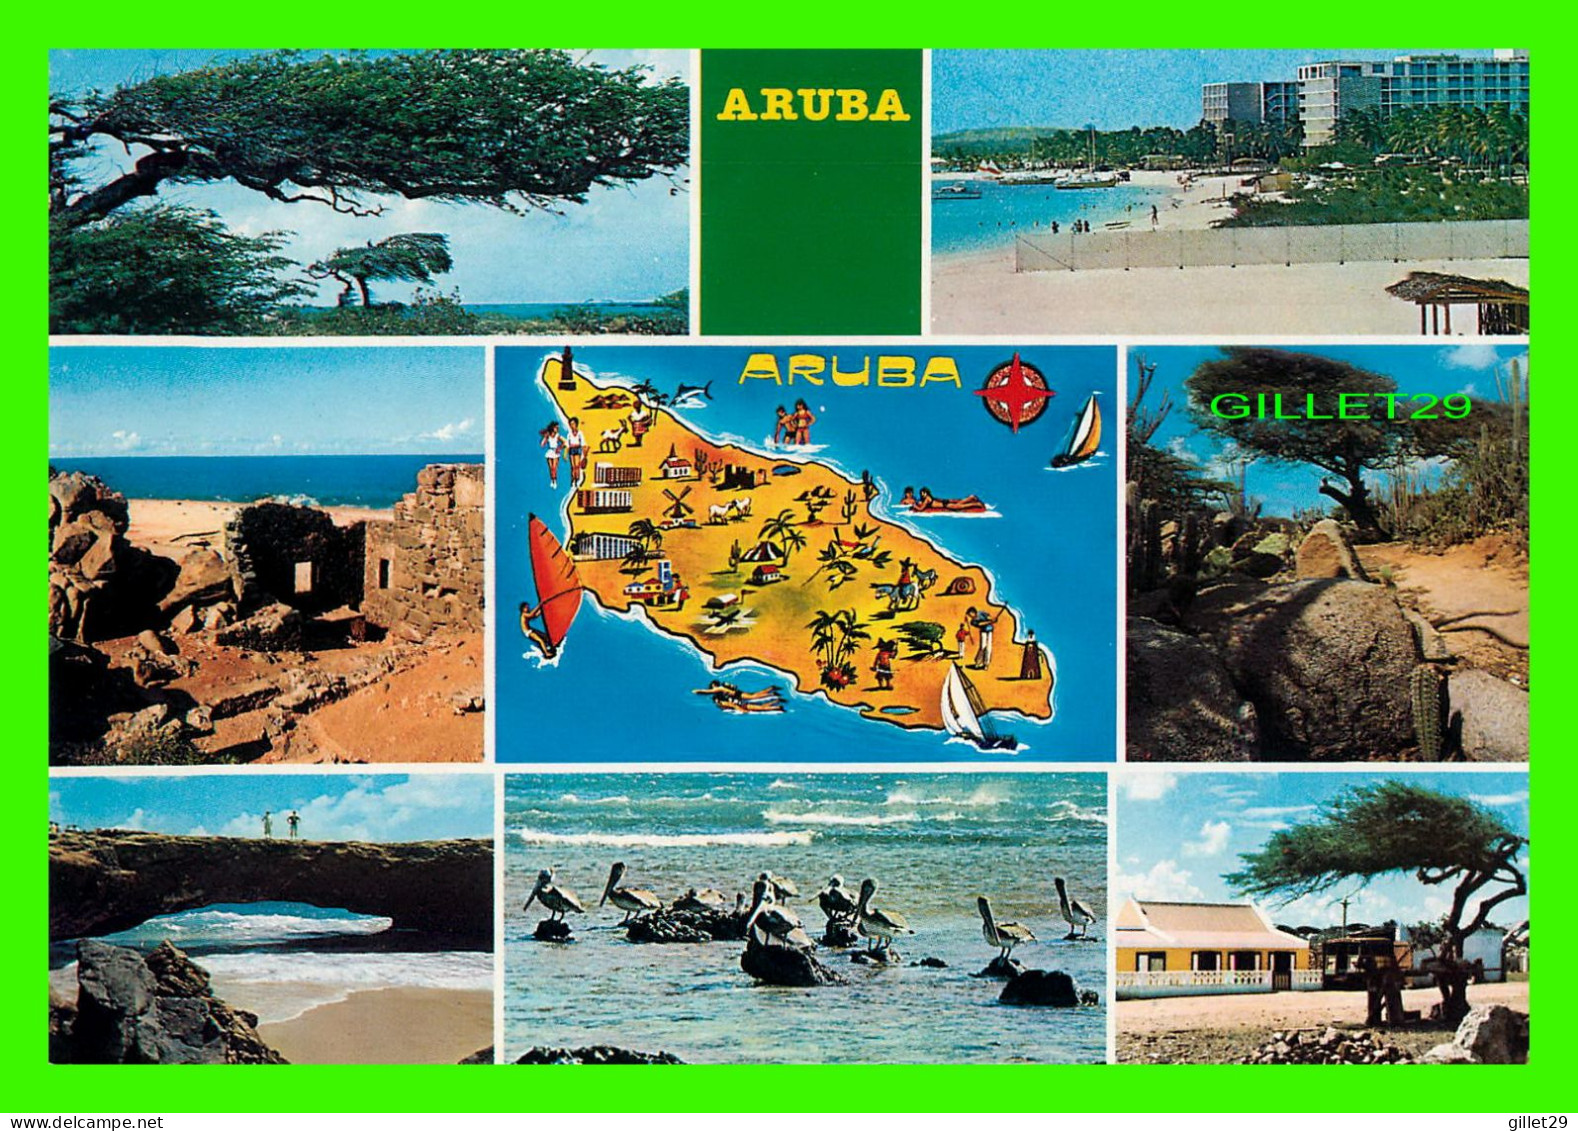 ARUBA - IMAGES OF ARUBA -  9 MULTIVUES - PUB BY D.W.S. - - Aruba